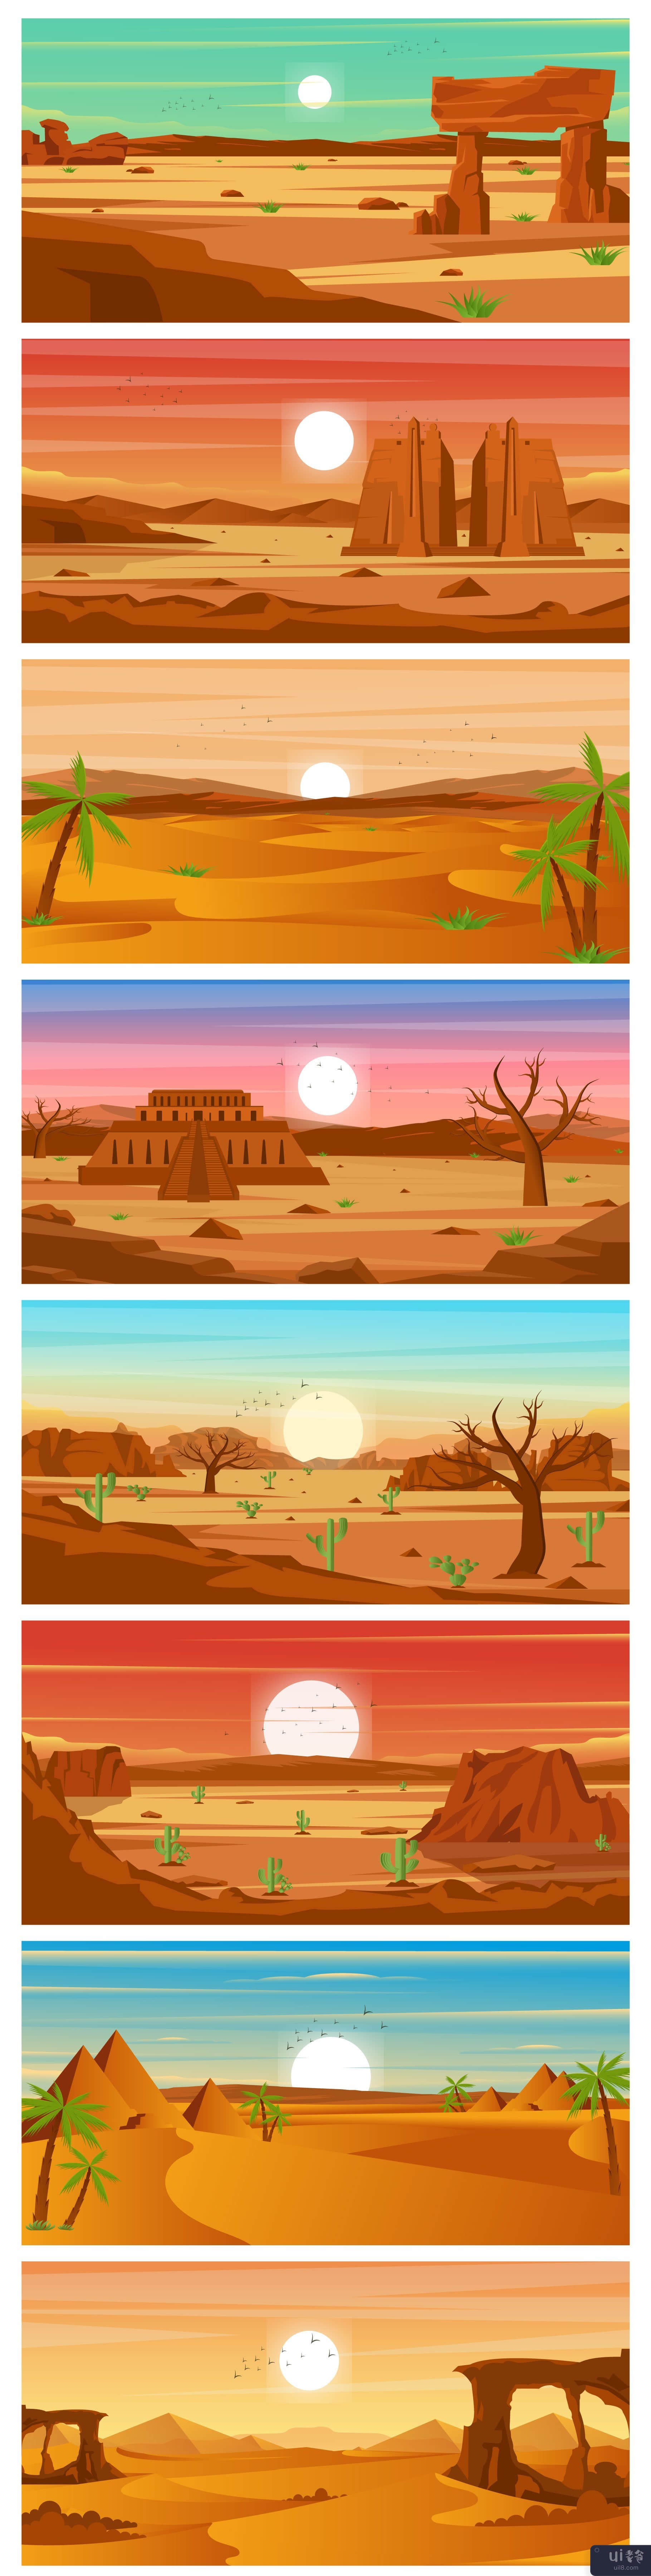 15 个沙漠背景插图(15 Desert Backgrounds Illustrations)插图1